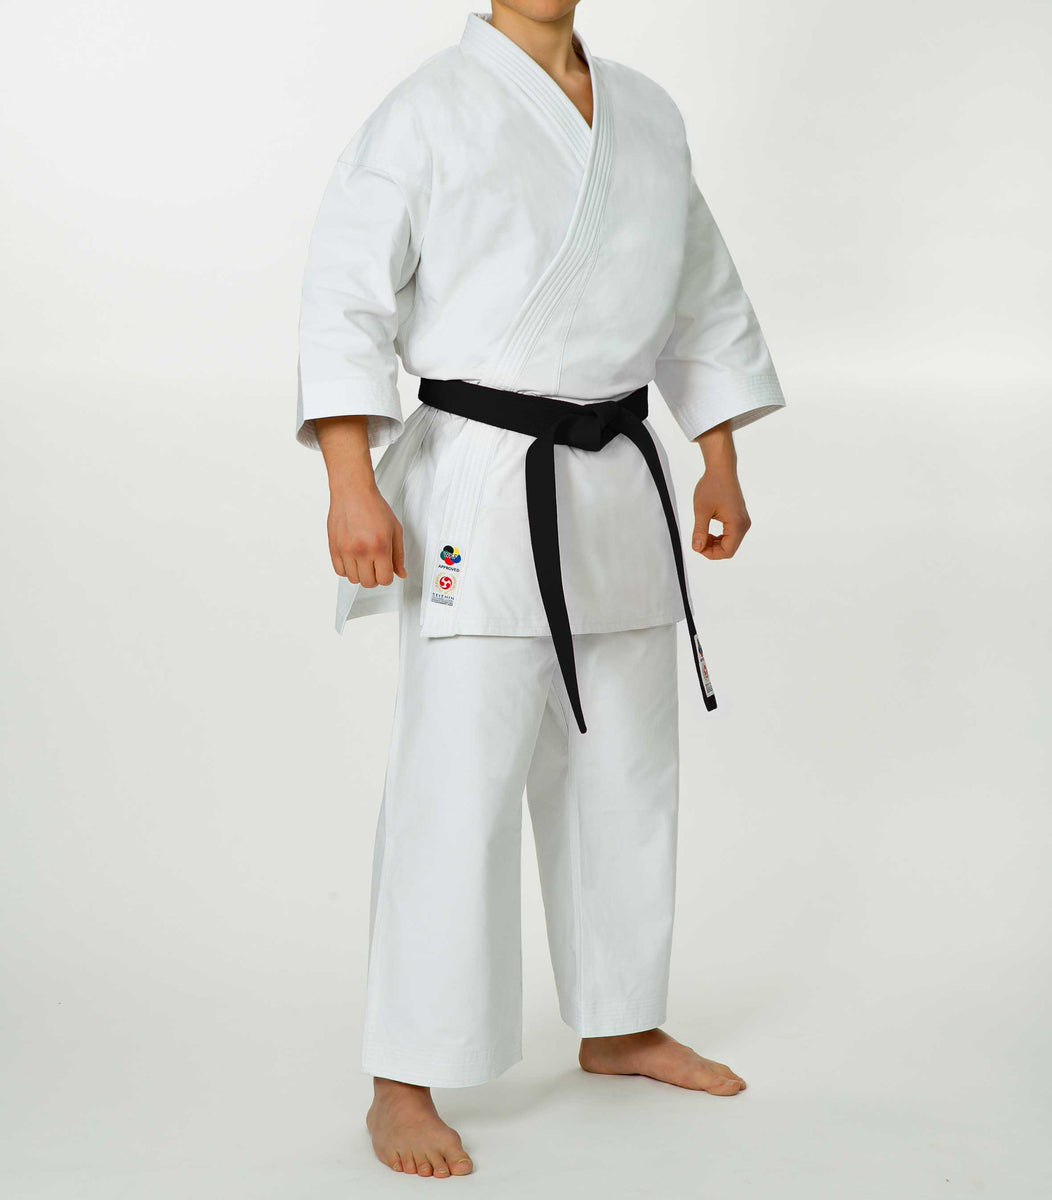 The Seishin Karate Gi (Uniform) – Seishin International